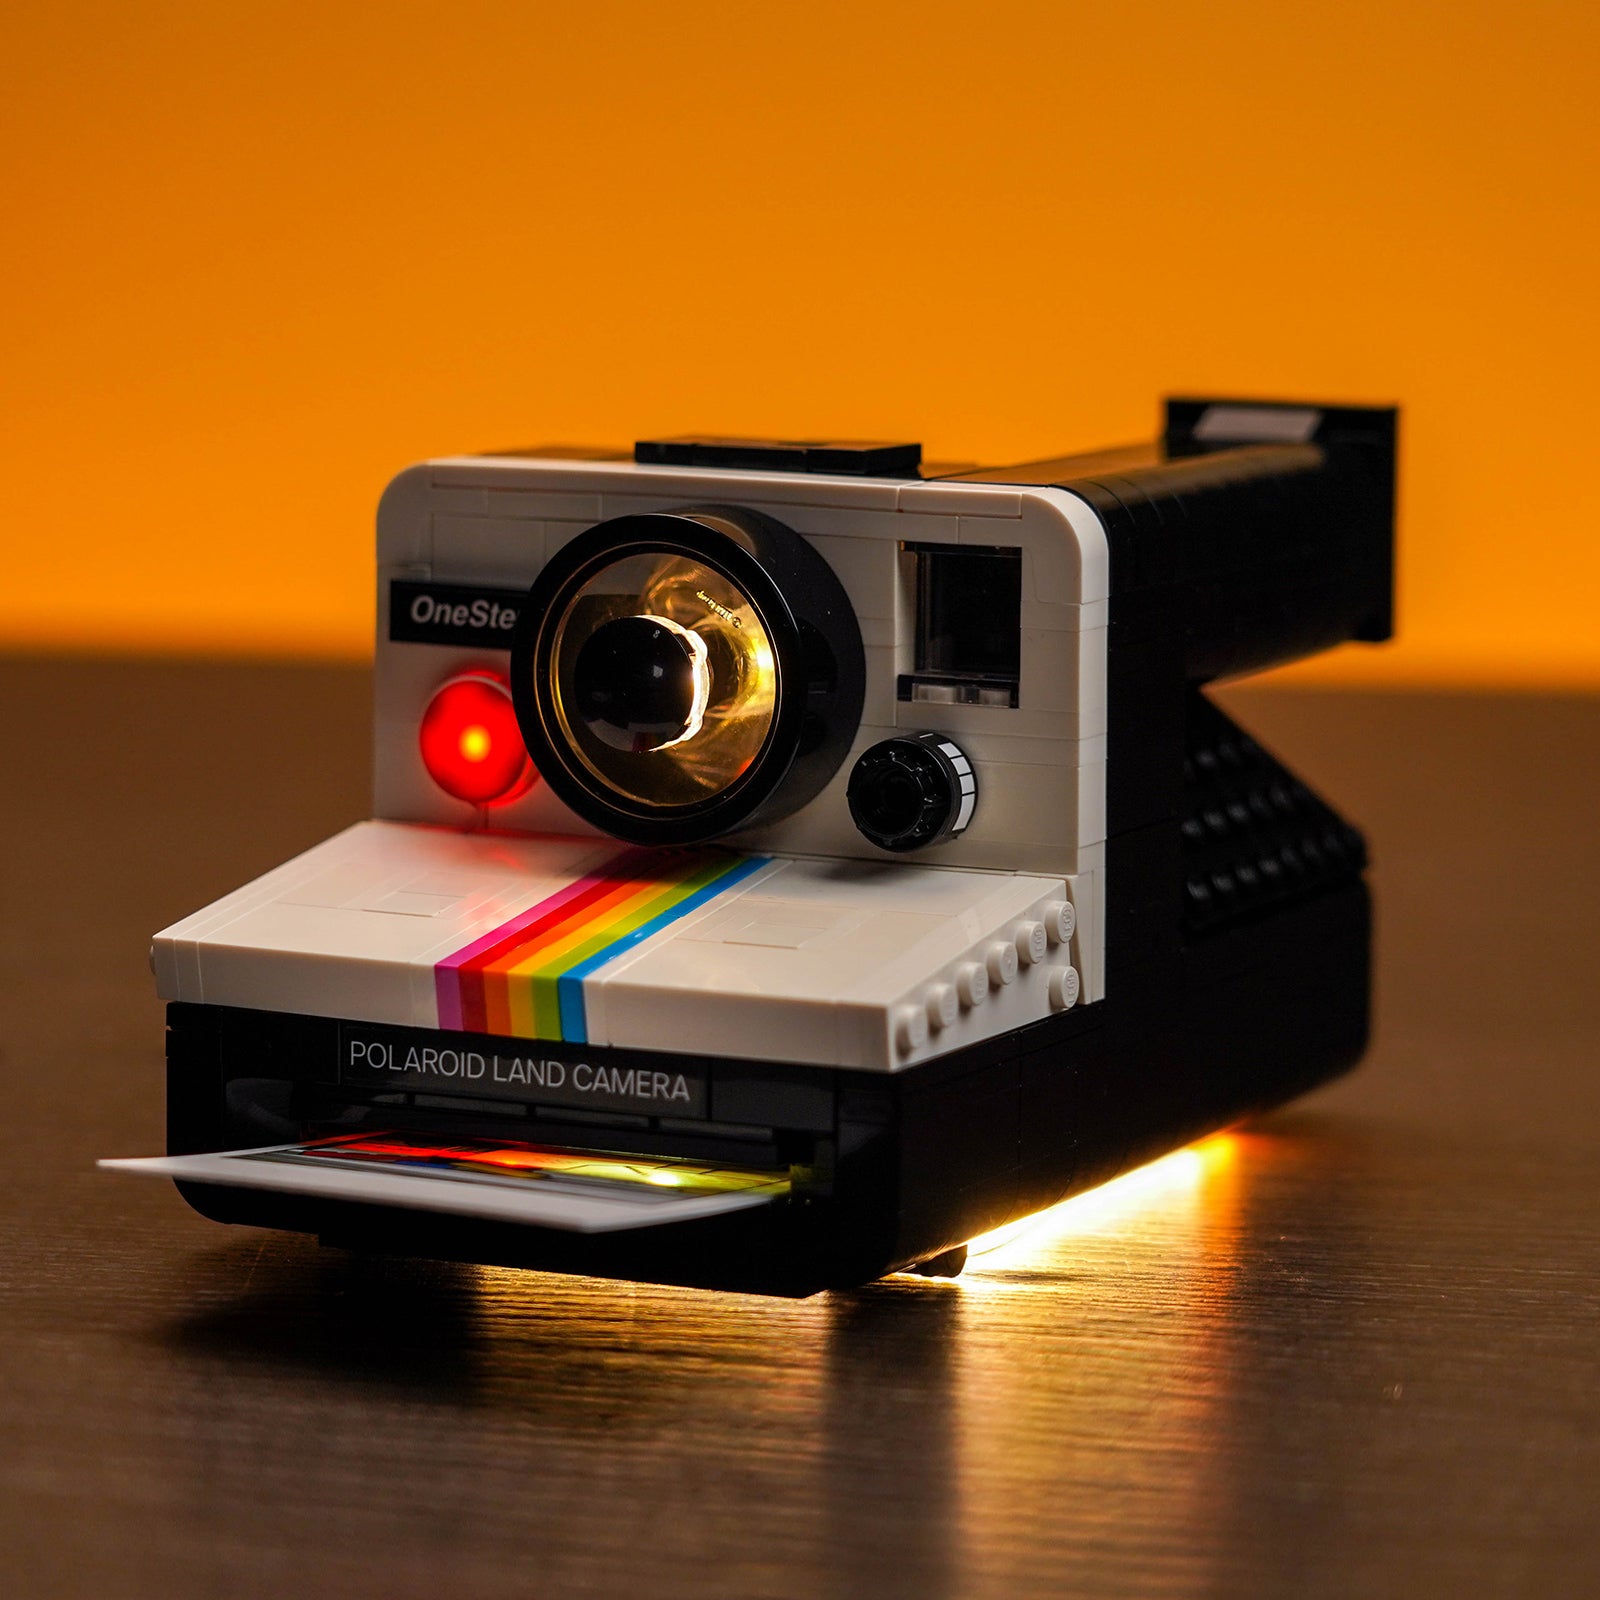 Kit d'éclairage BrickBling pour appareil photo LEGO Ideas Polaroid OneStep SX-70 21345